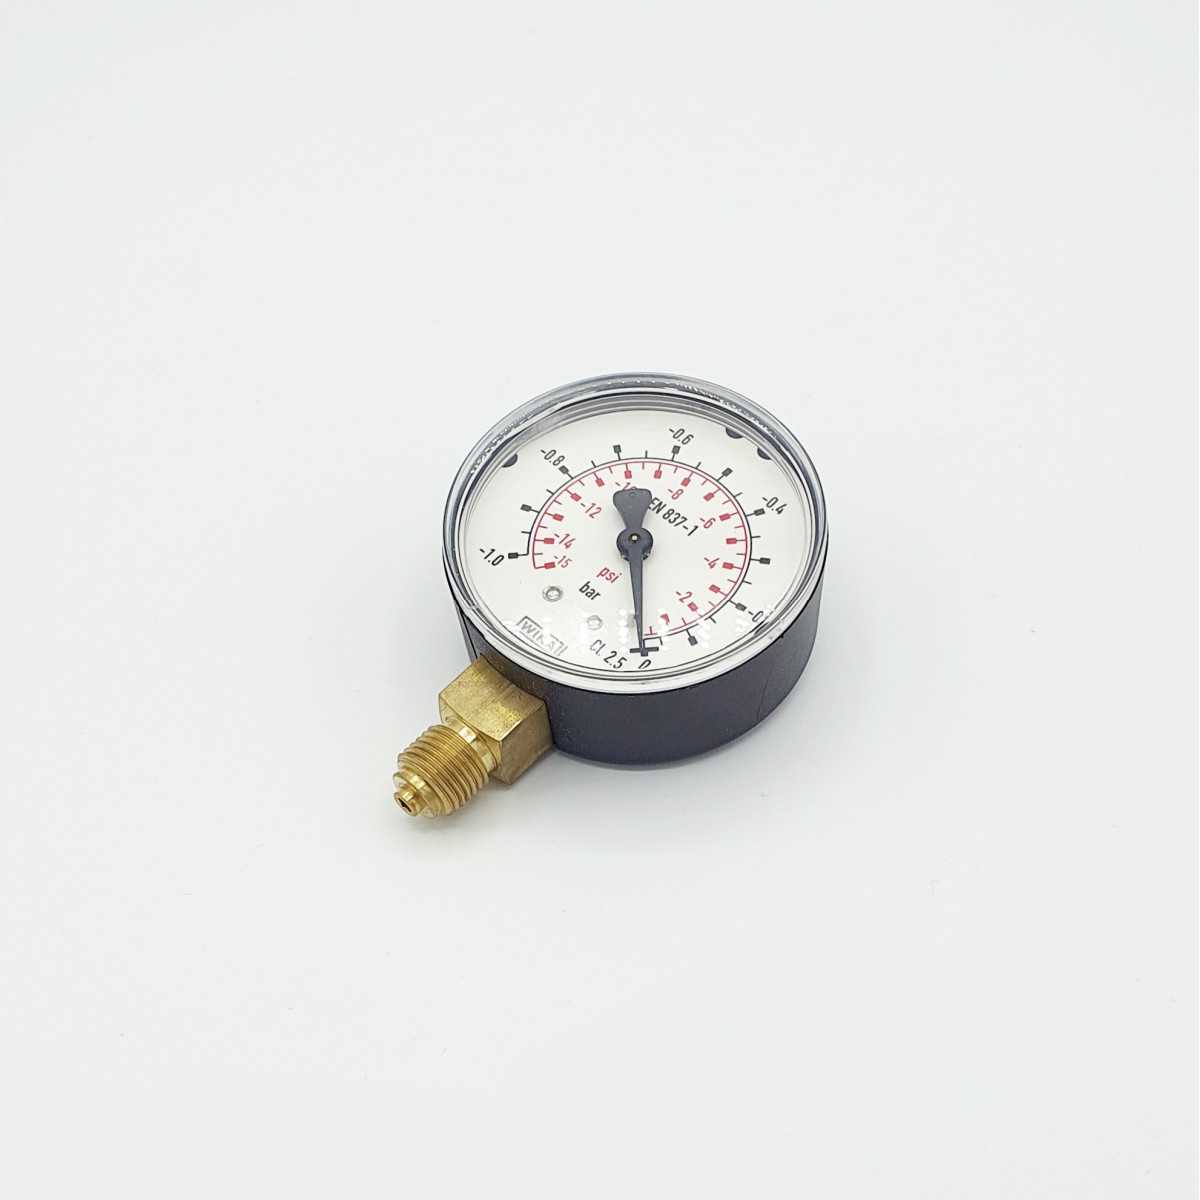 Vacuum gauge DM63 G 1/4" U | Beta Online Shop